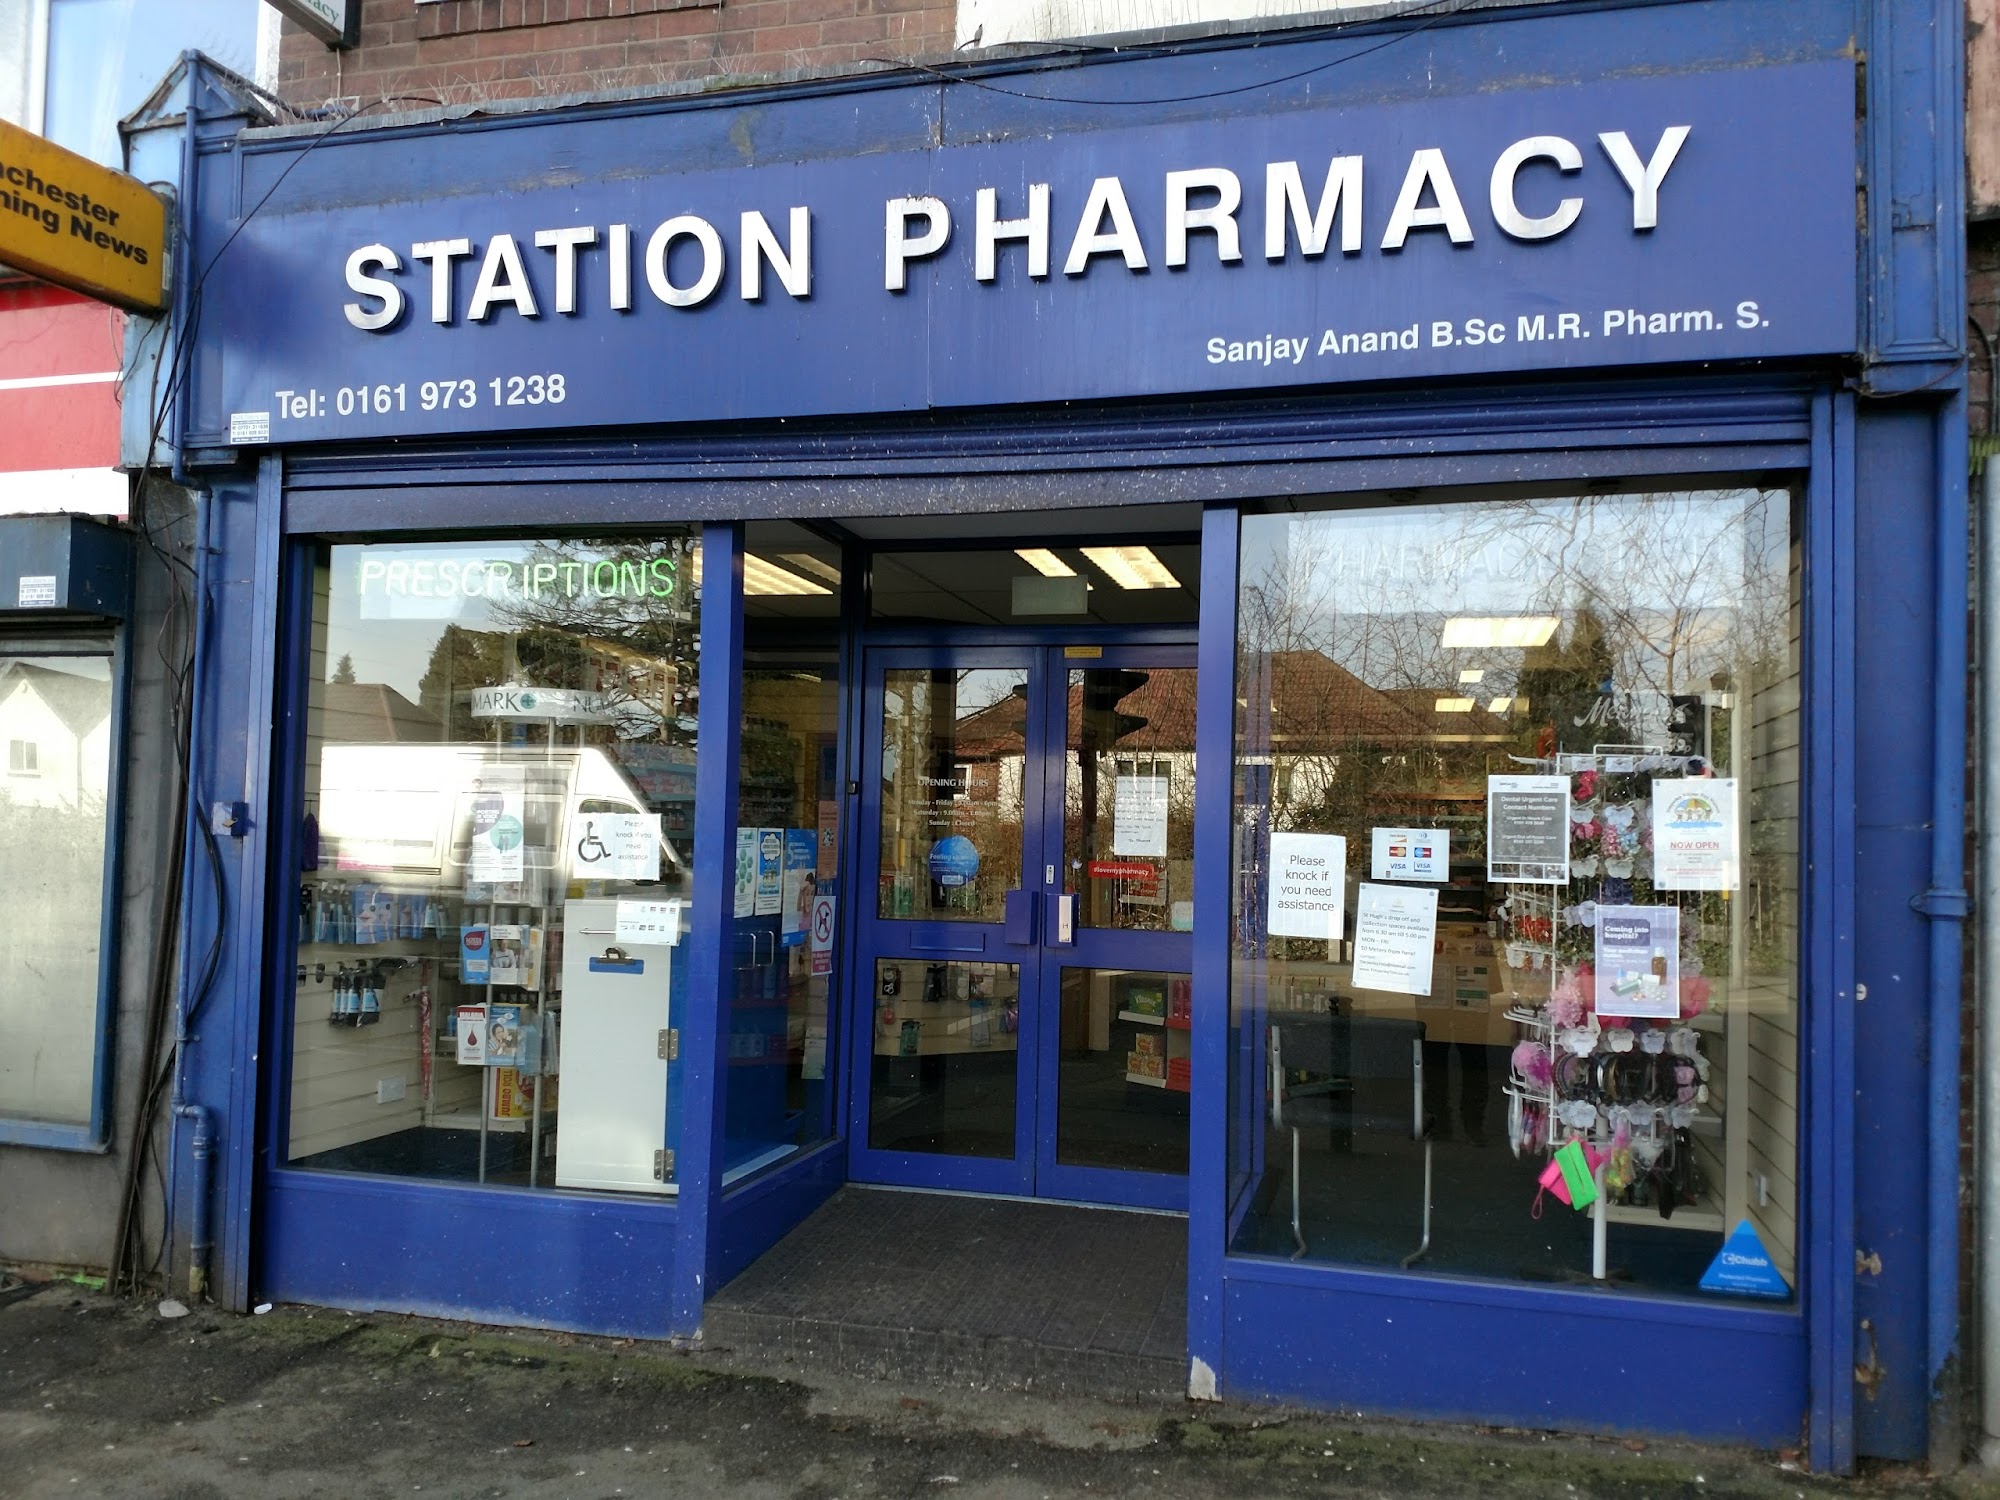 Station Pharmacy